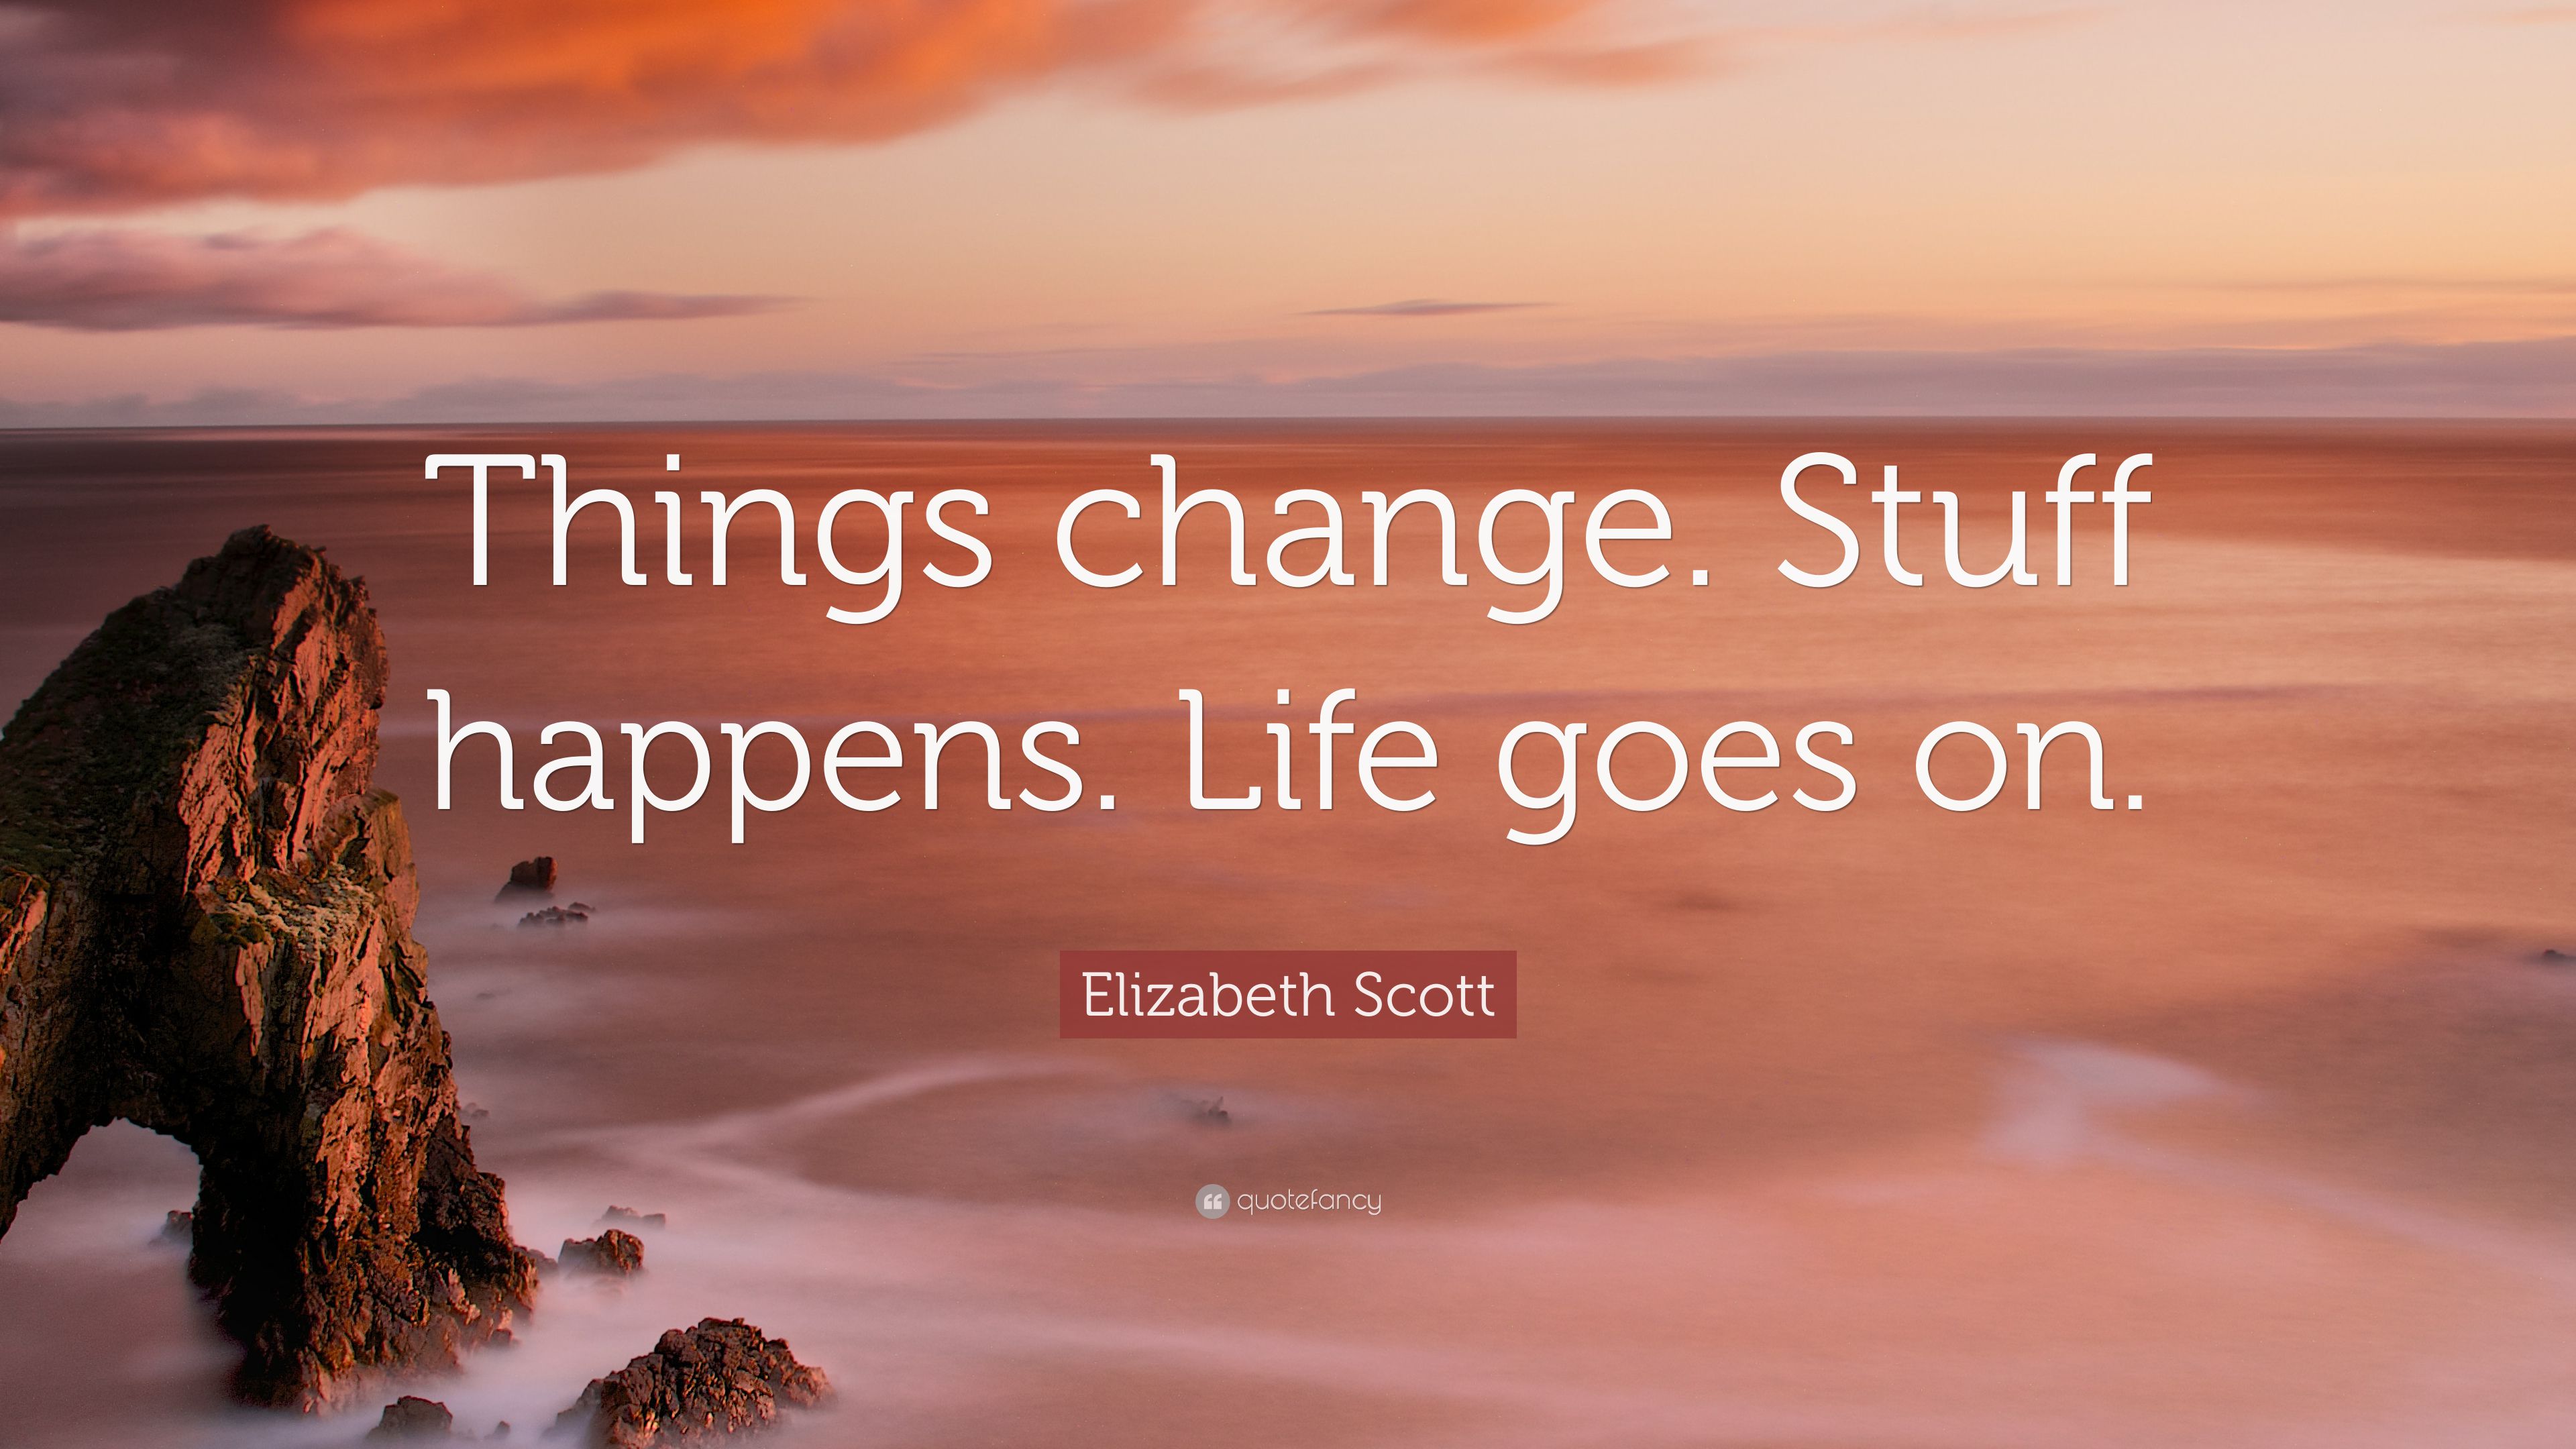 Elizabeth Scott Quote: “Things change. Stuff happens. Life goes